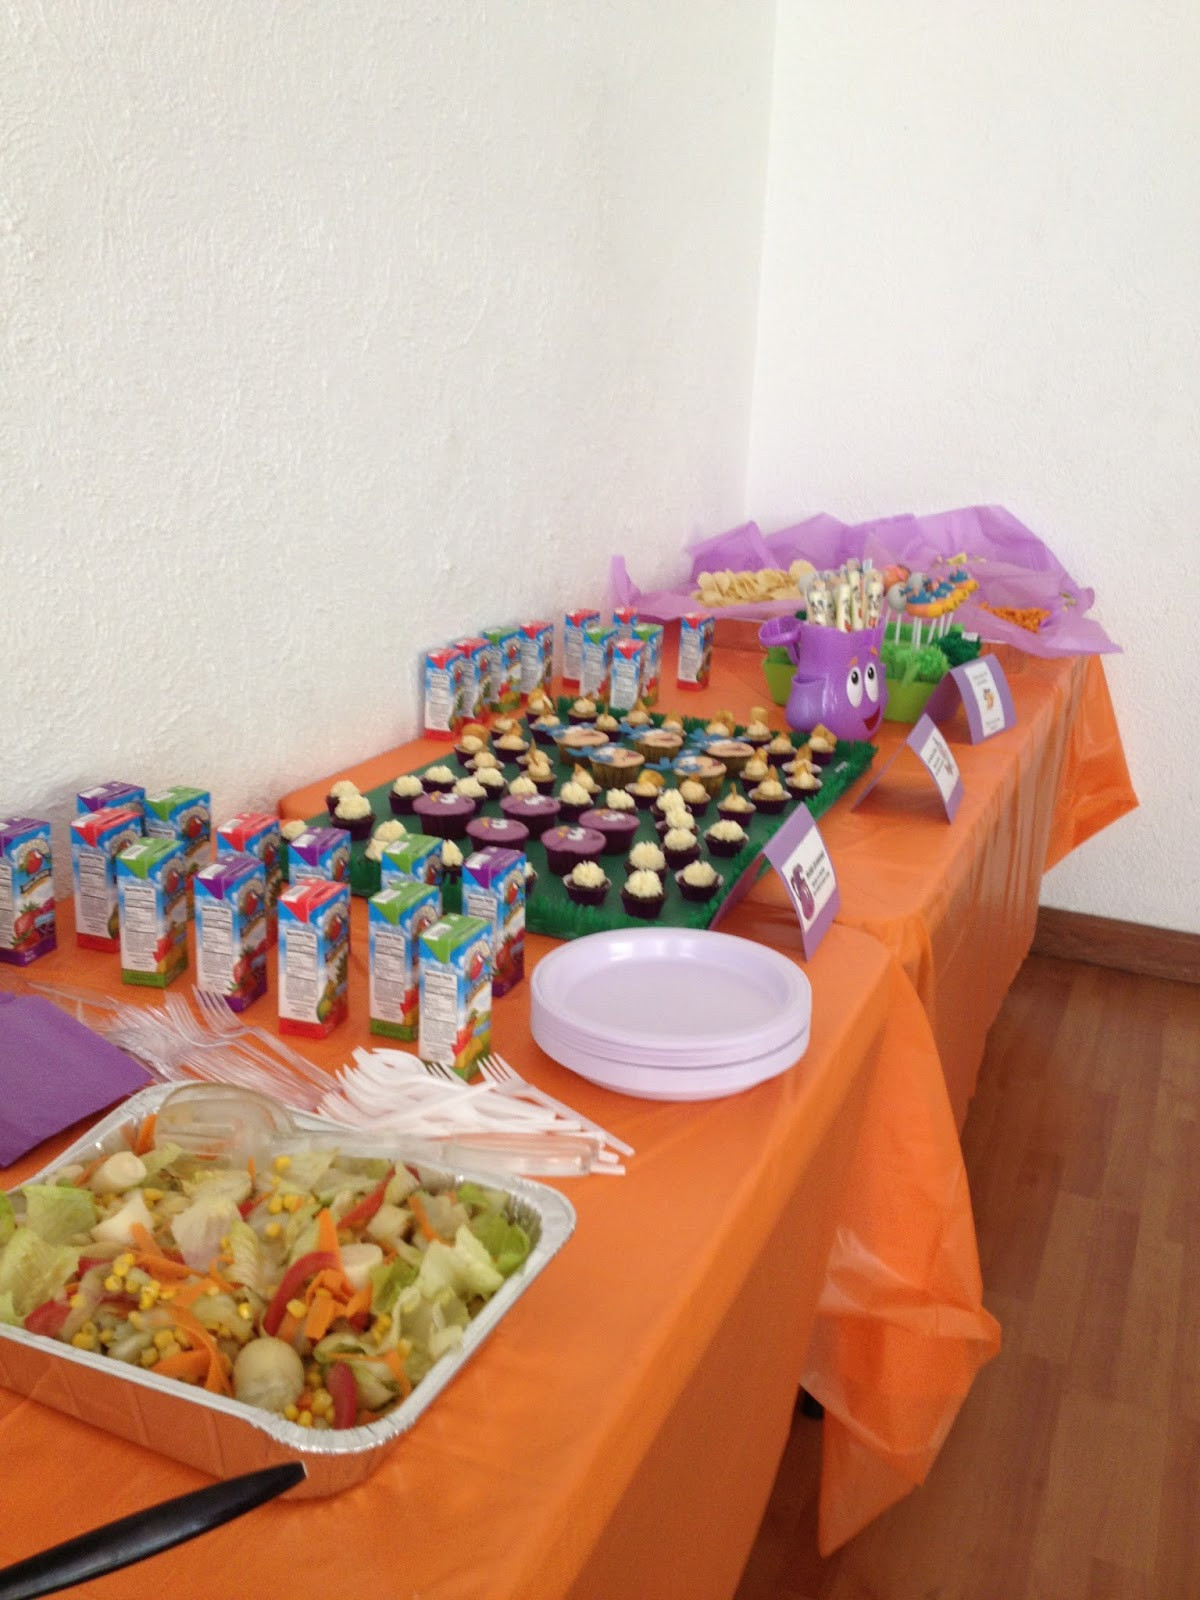 Dora Birthday Party Food Ideas
 A Muffin Top Full Cupcakes Dora the Explorer birthday